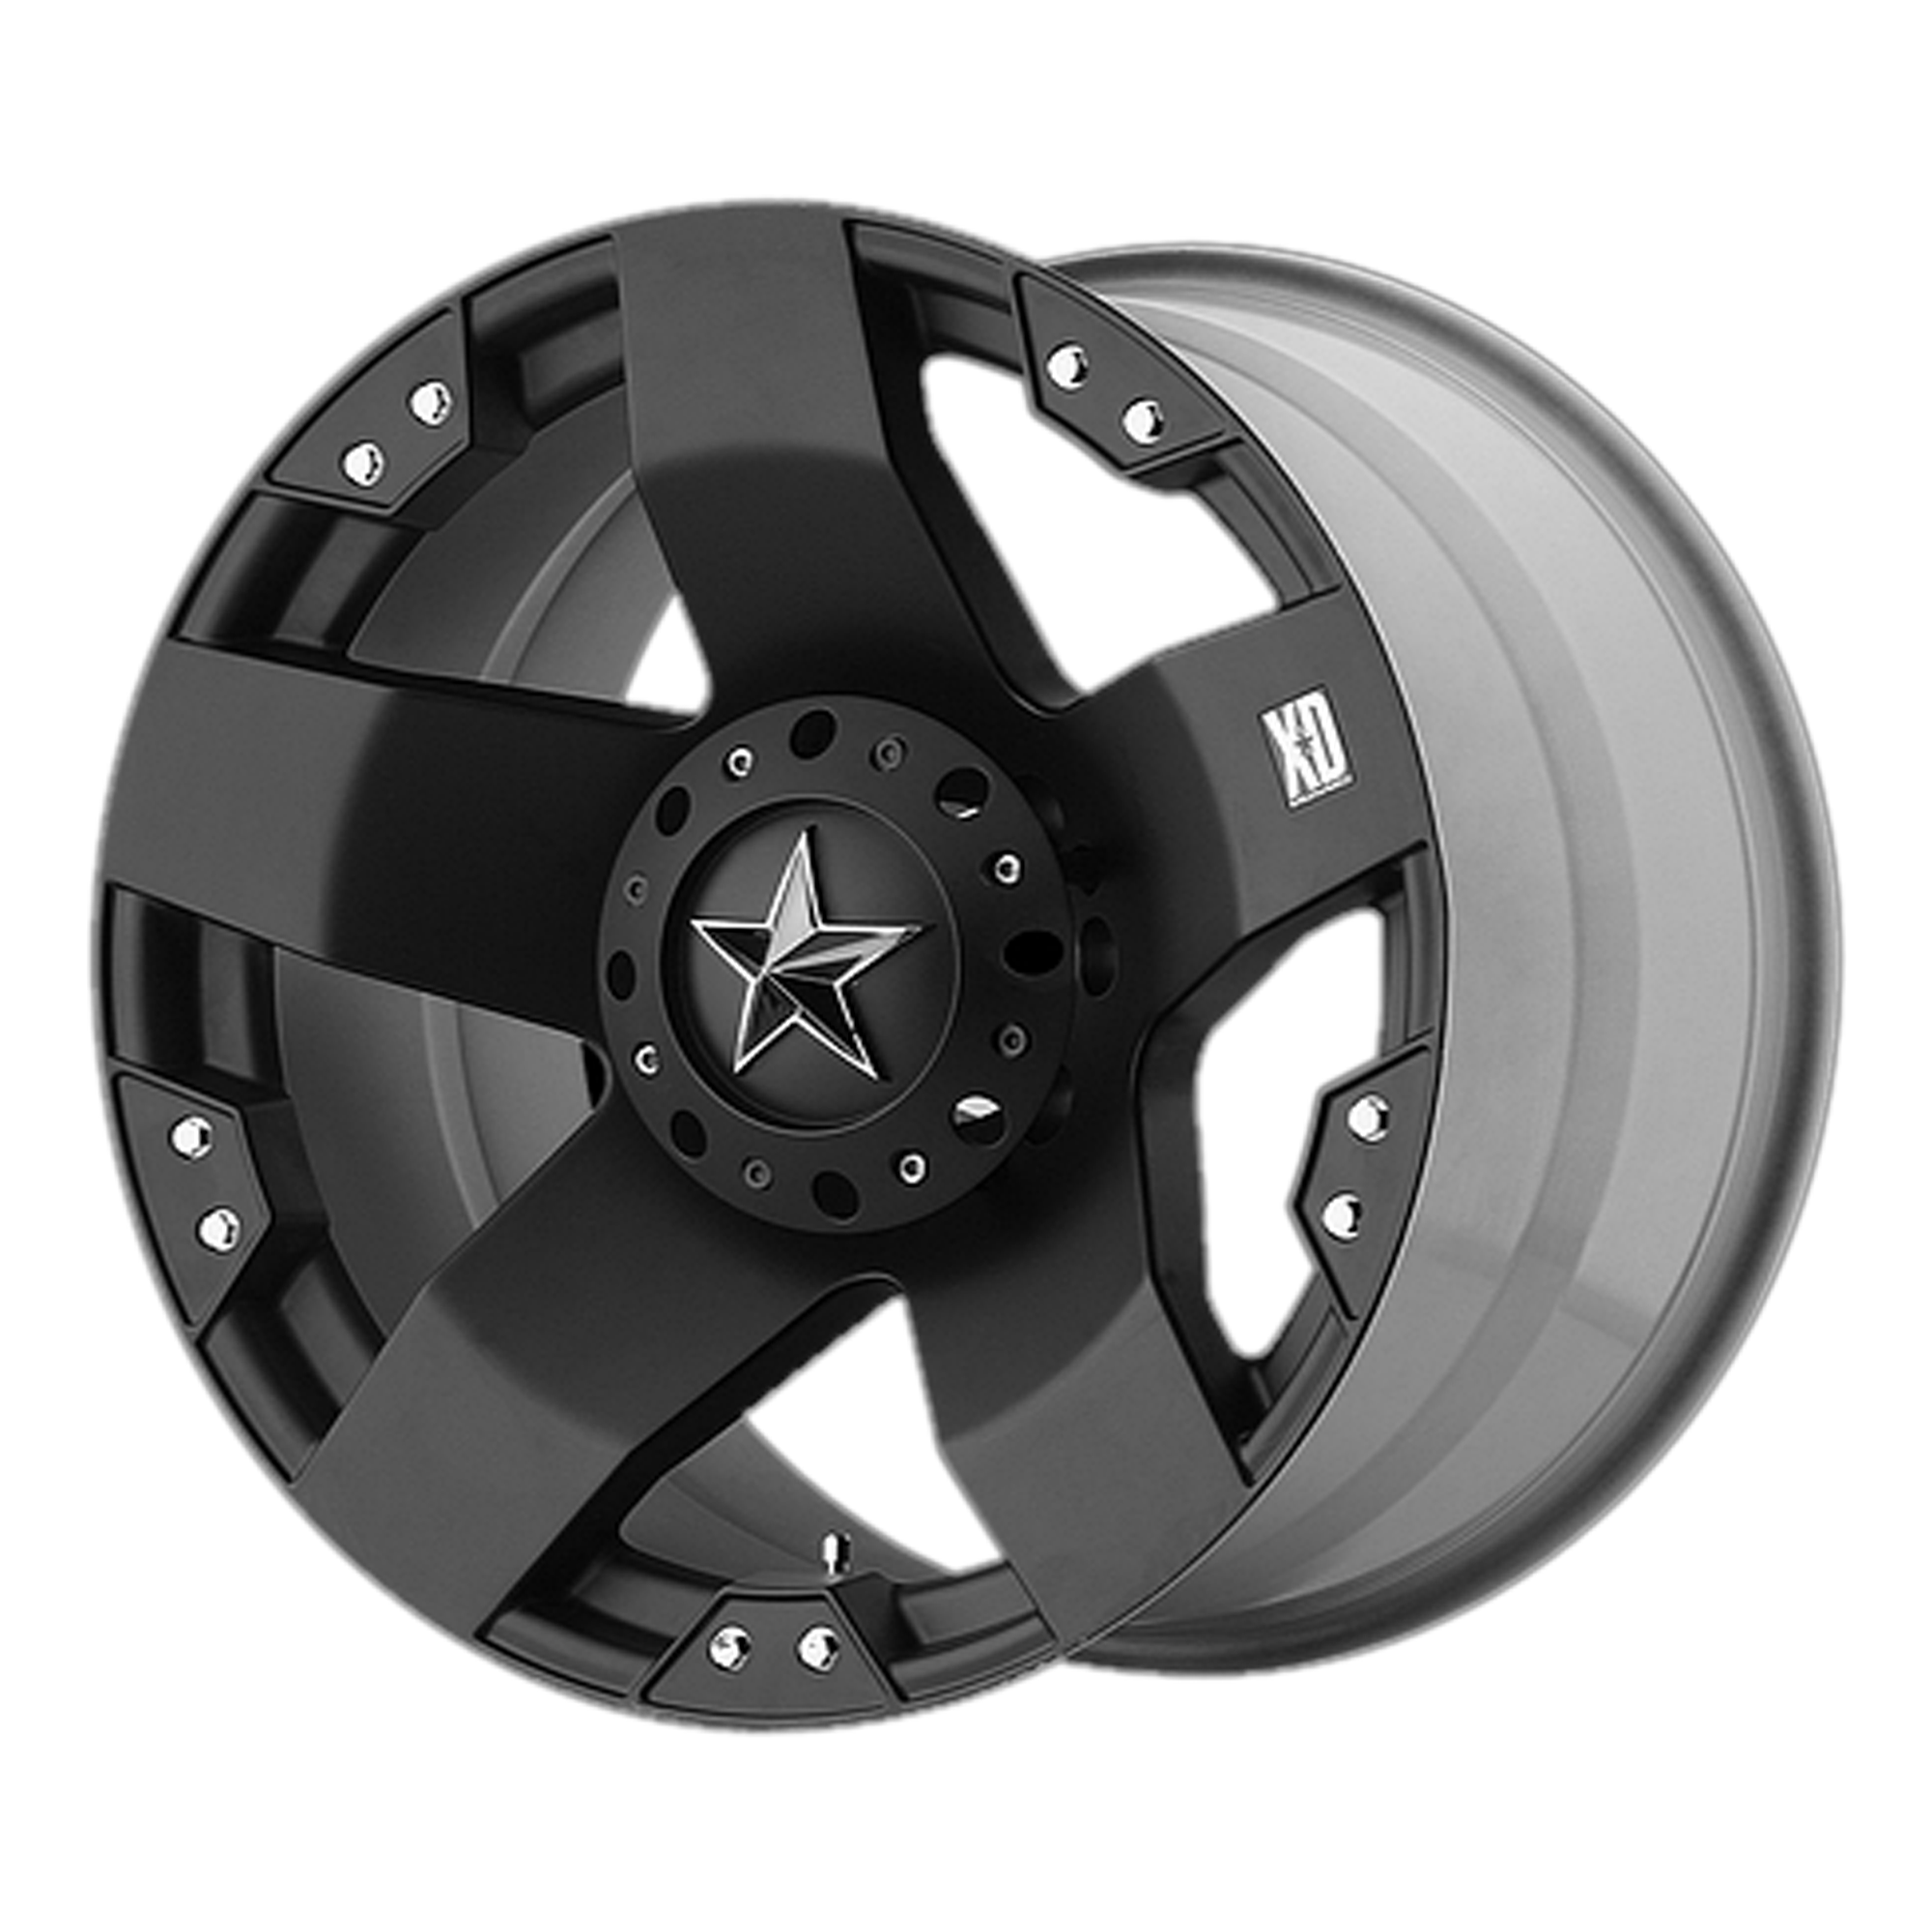 ROCKSTAR 17x8 5x127.00/5x135.00 MATTE BLACK (10 mm) - Tires and Engine Performance